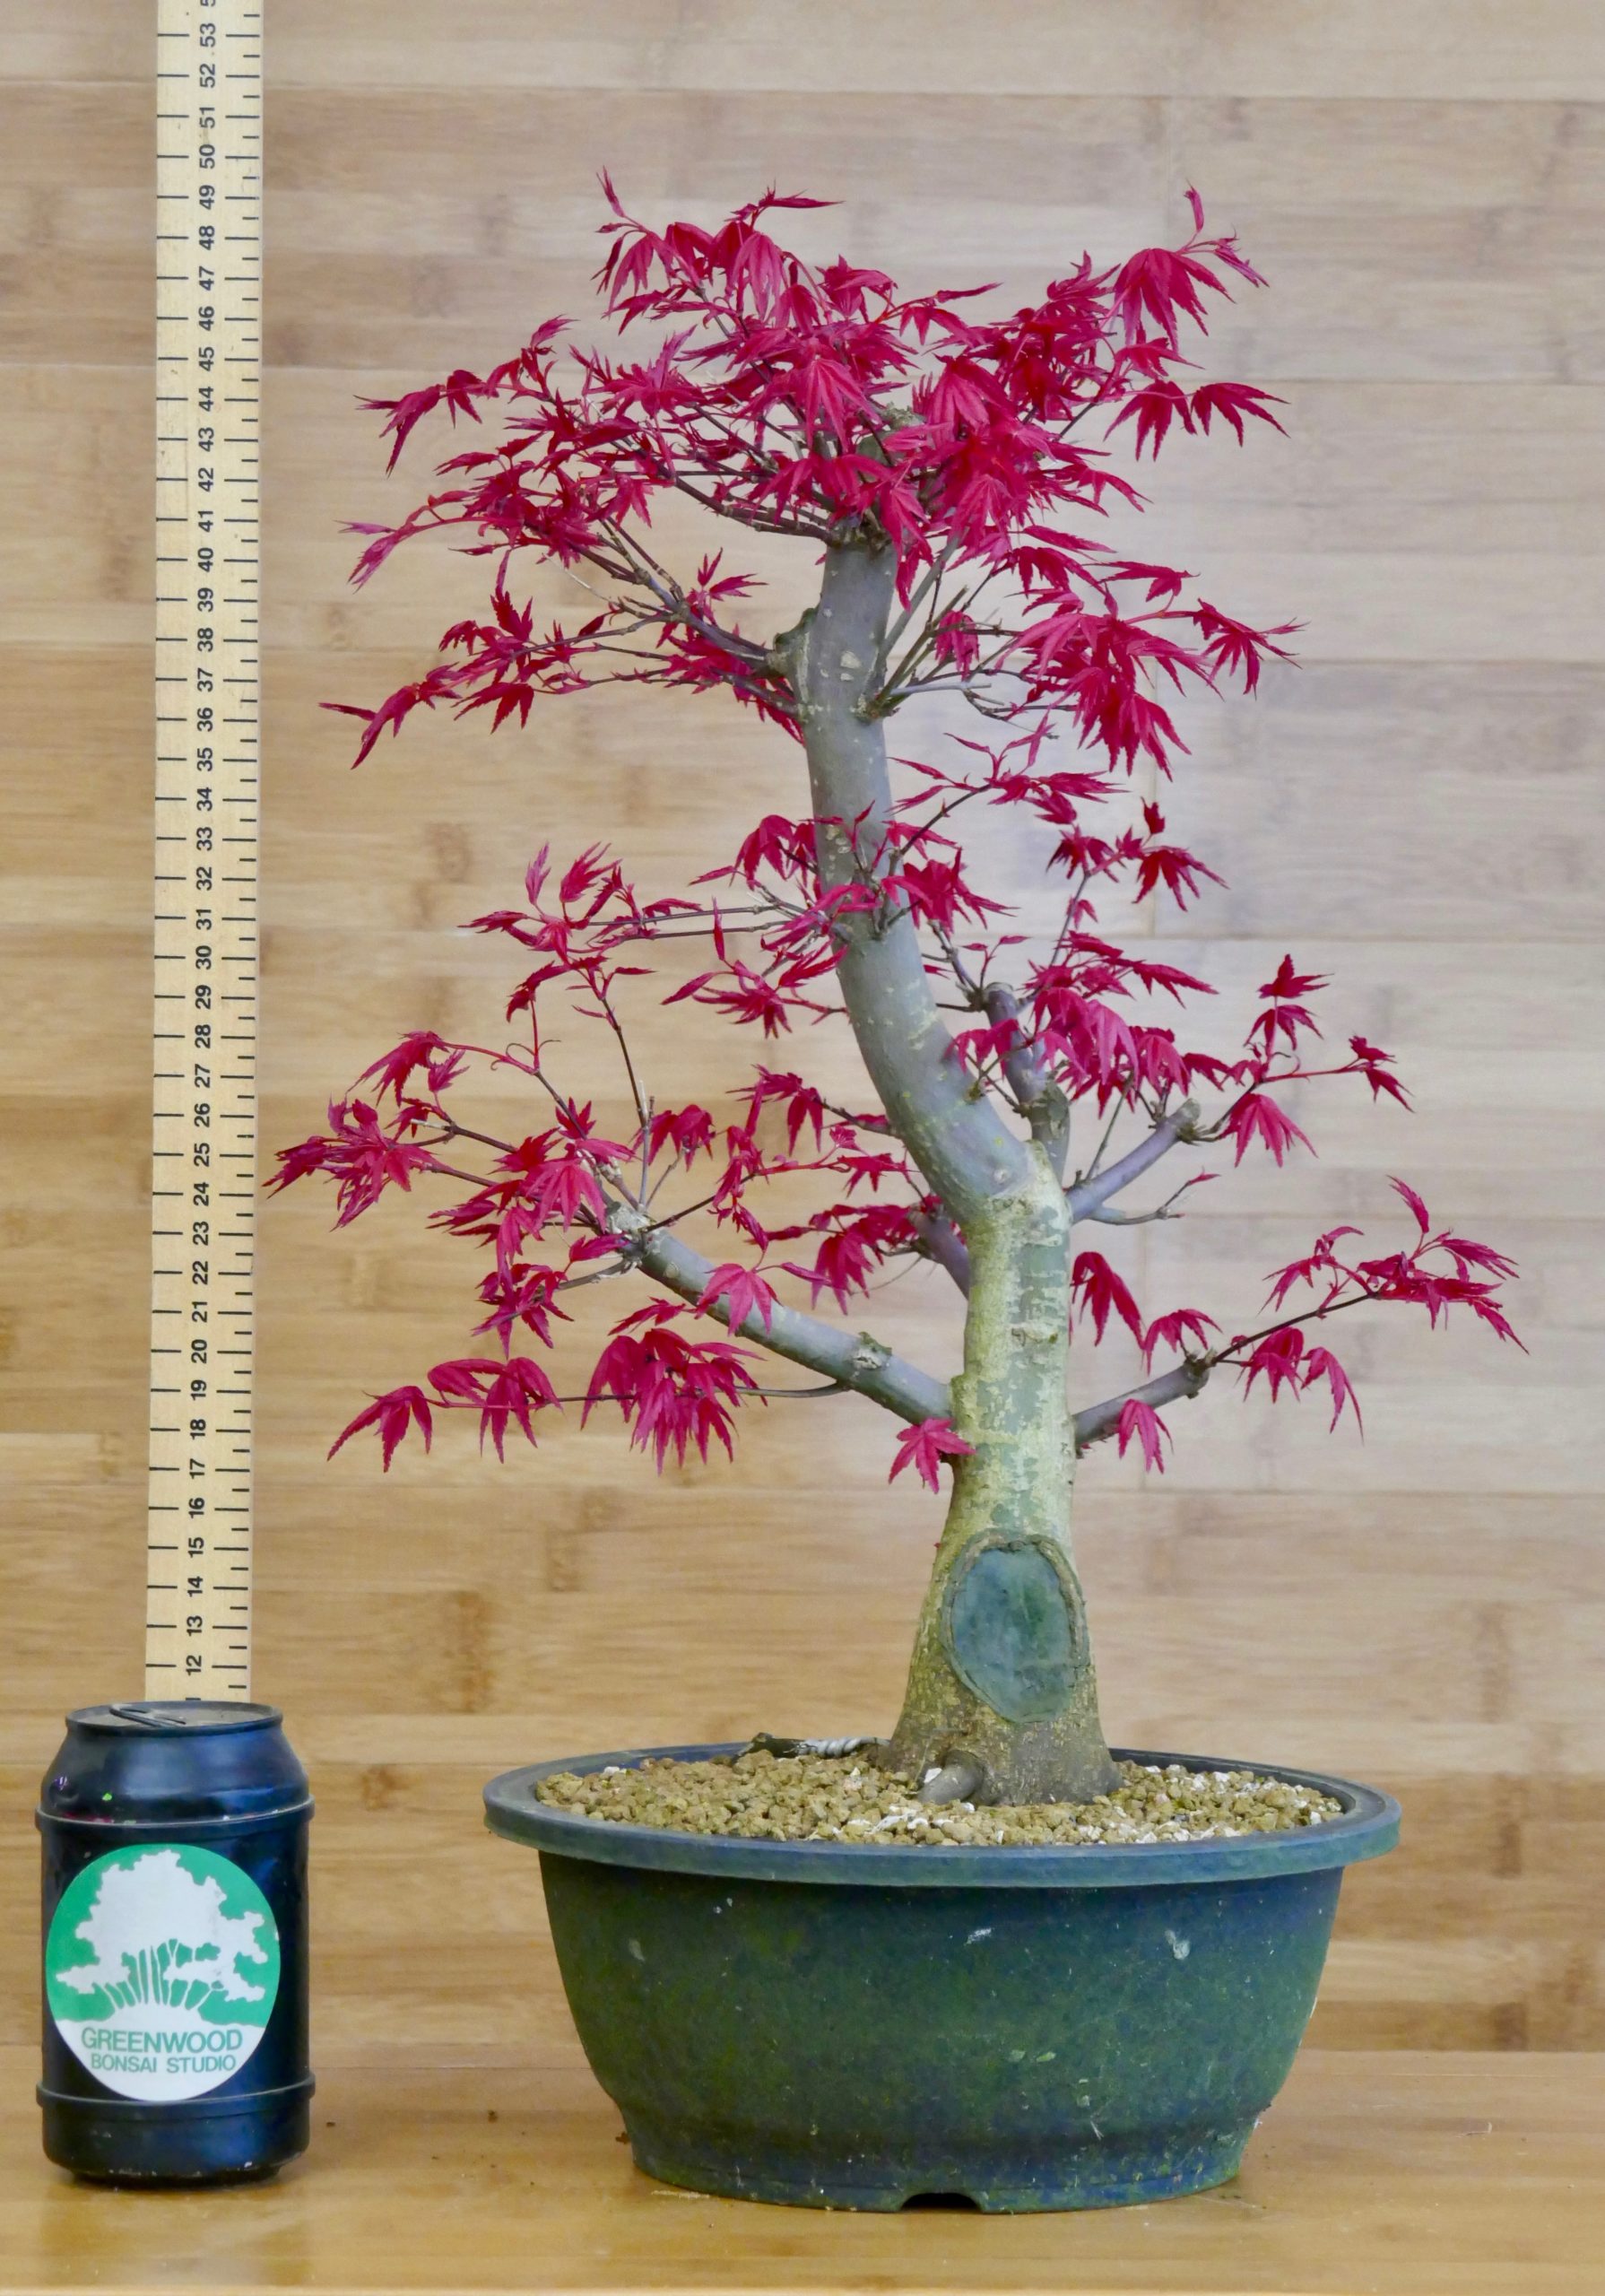 deshojo japanese maple bonsai tree - greenwood bonsai studio